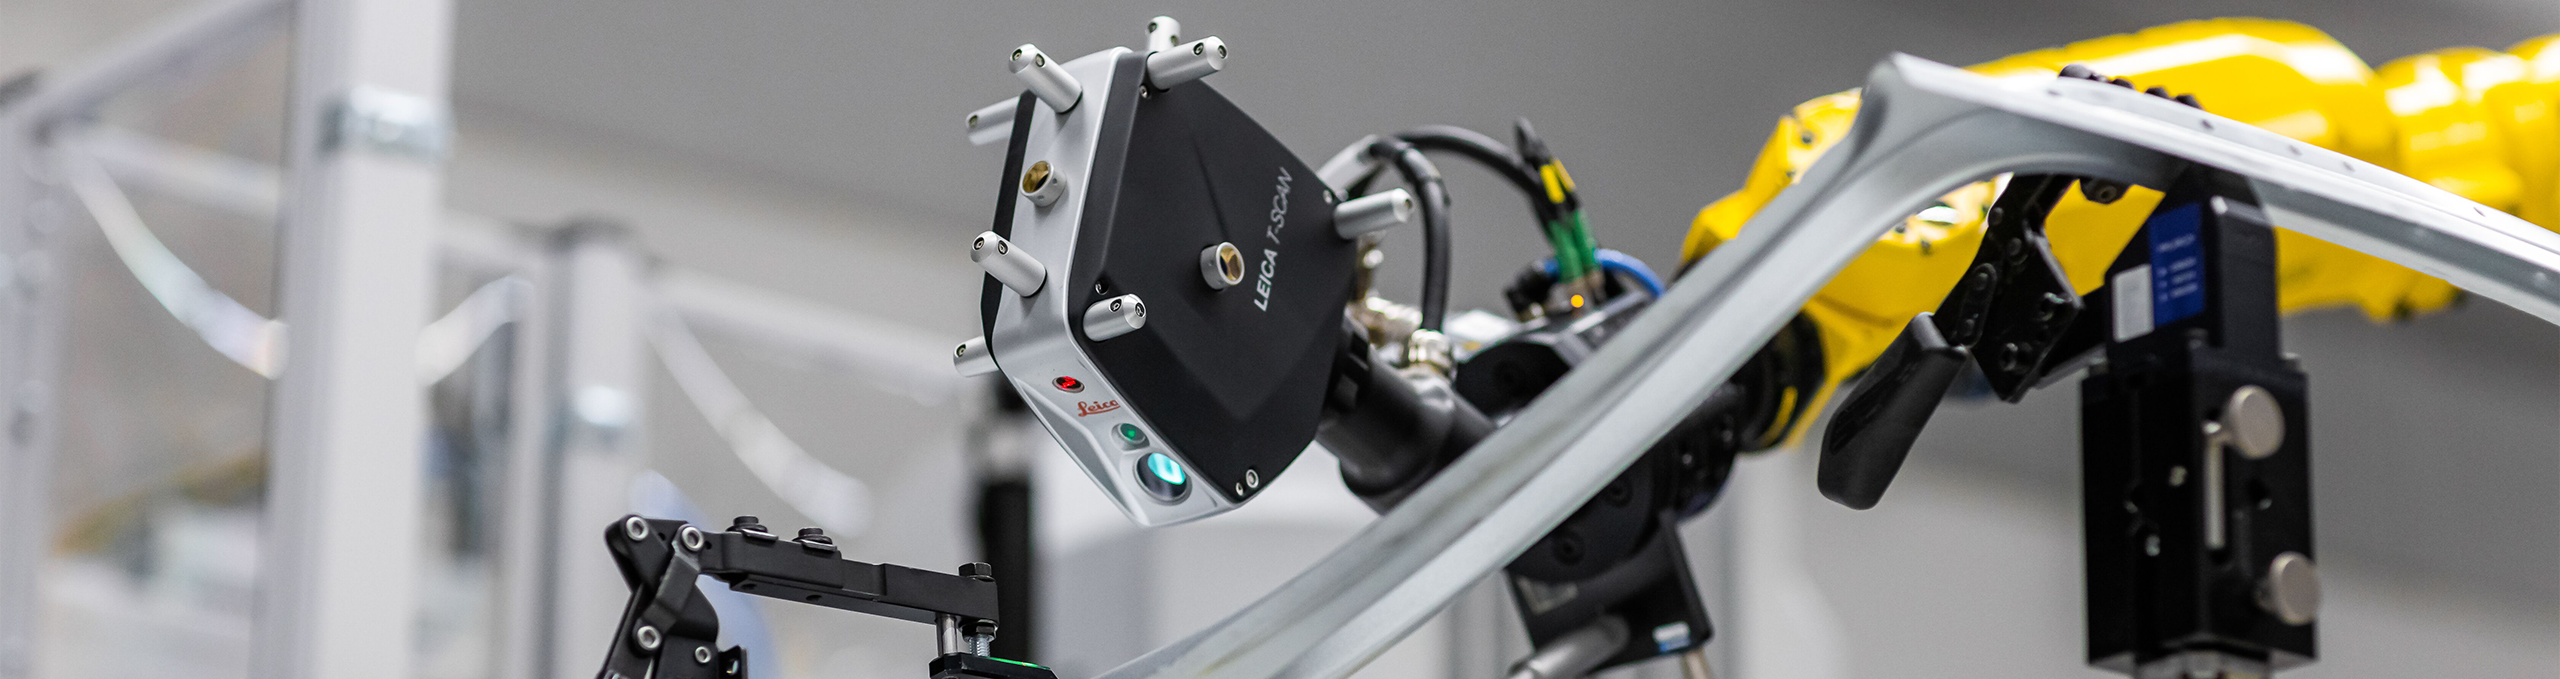 Automation tracker robotic arm